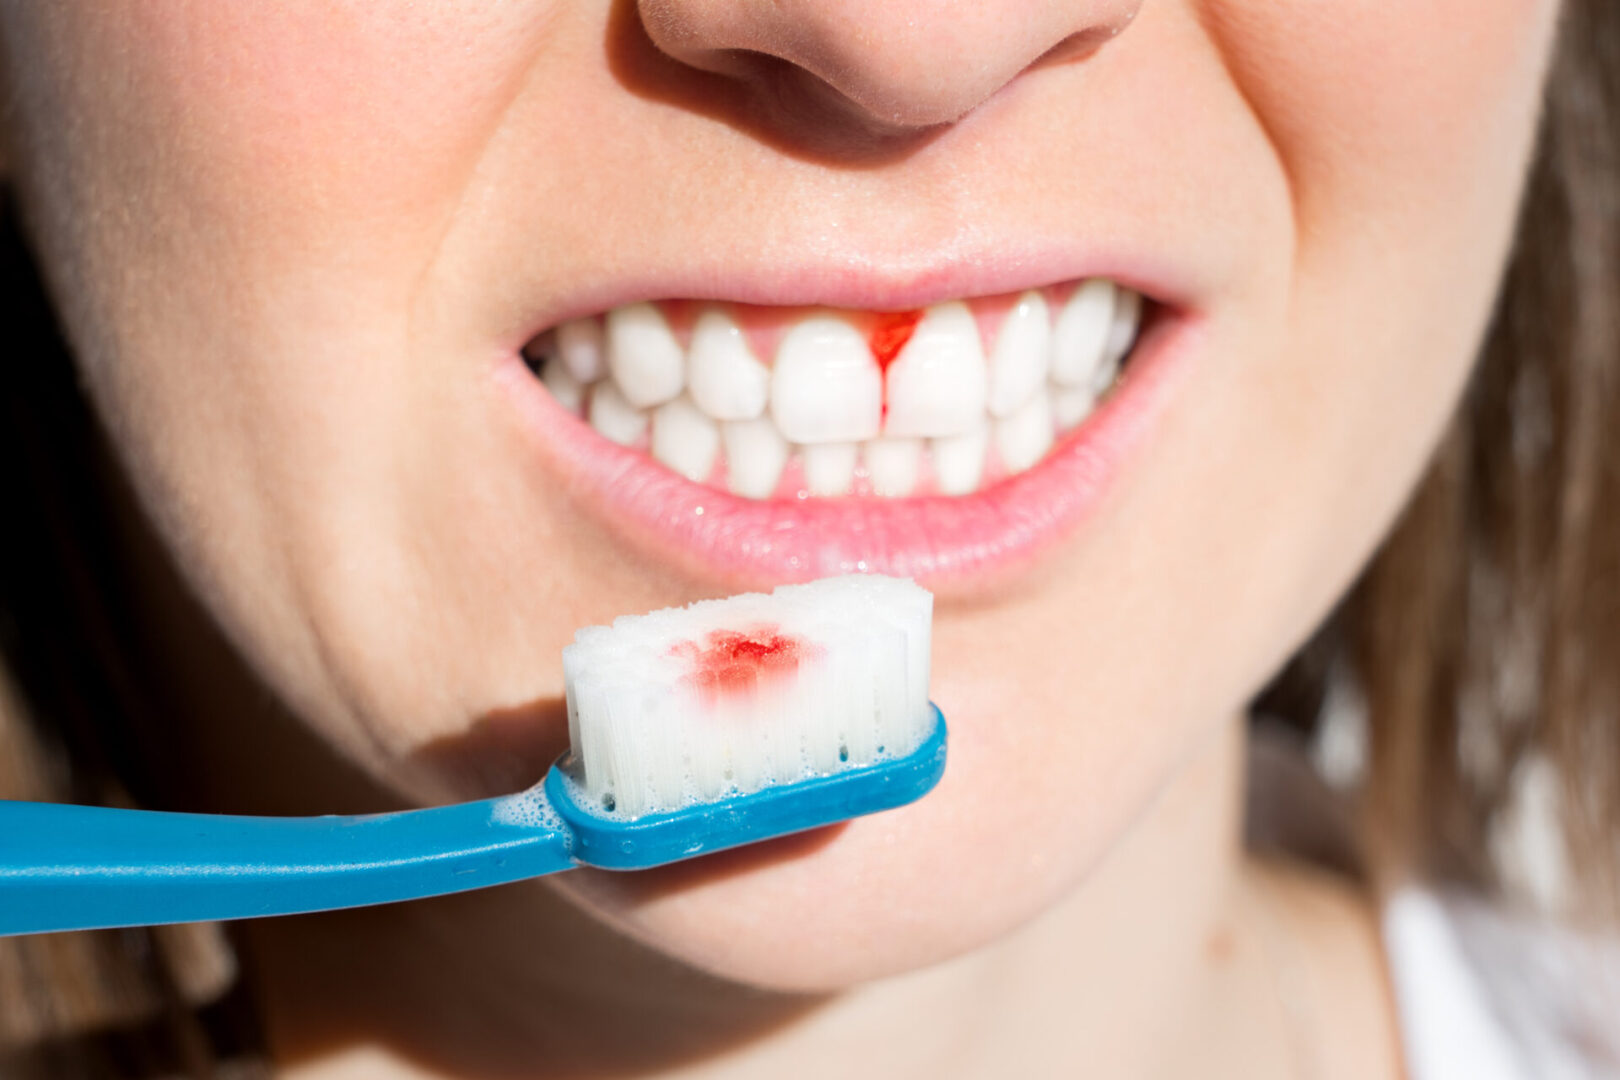 Woman with bleeding gums during teeth brushing. Hard toothbrush problem. Periodontal disease, avitaminosis, gingivitis, scurvy. High quality photo